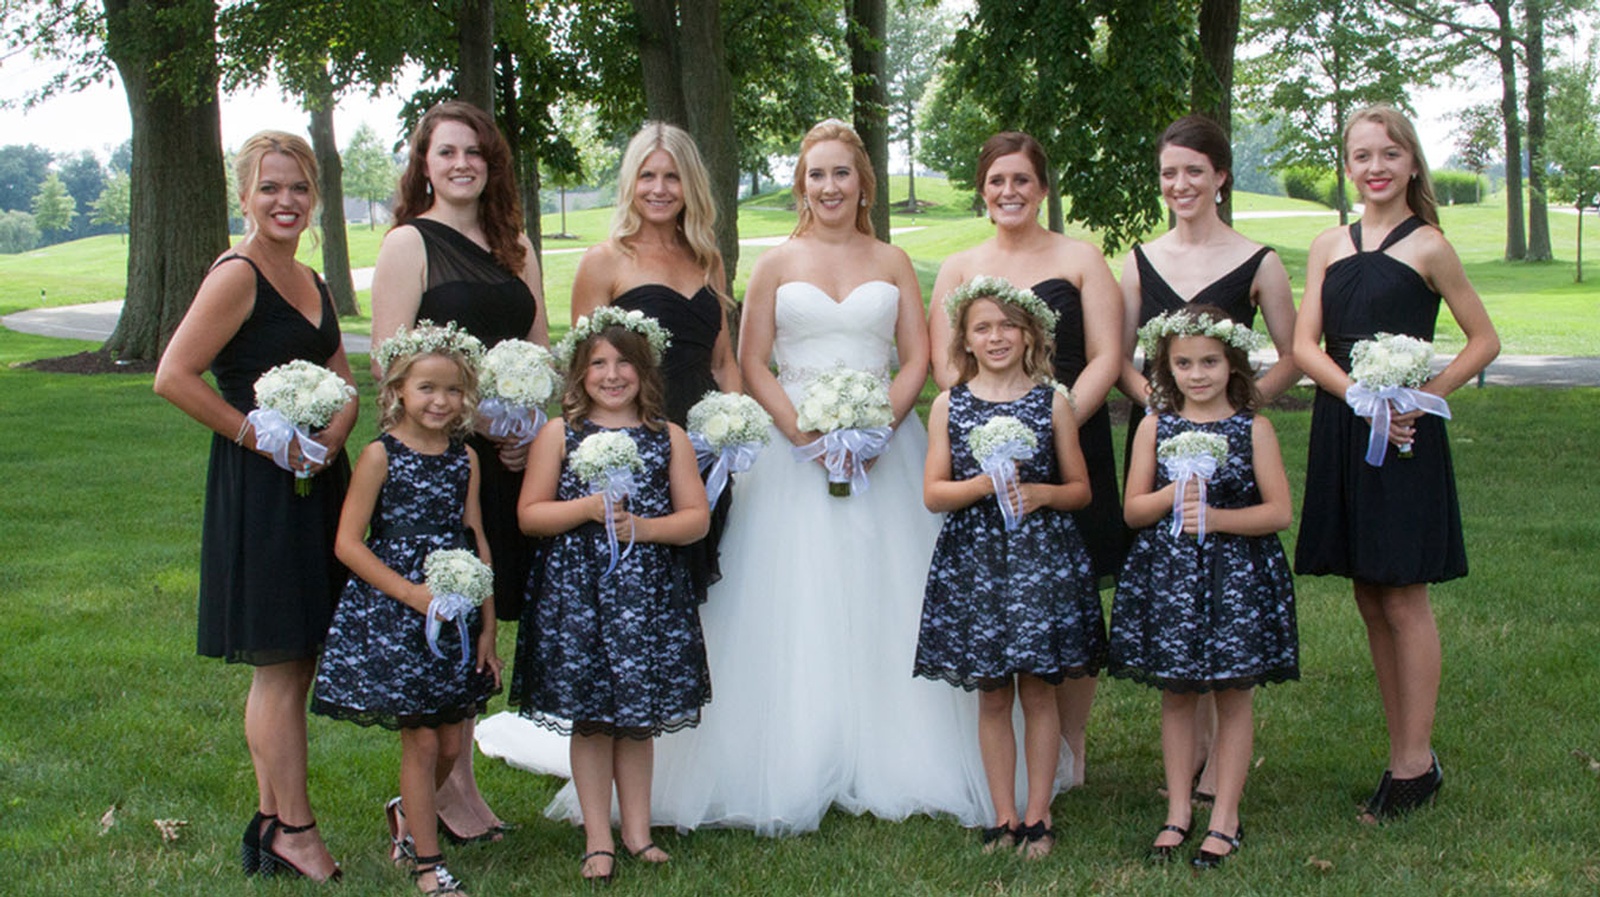 The Bridesmaids Photograph by Jim Schwarz Photographers - Wedding Photographer Canal Winchester